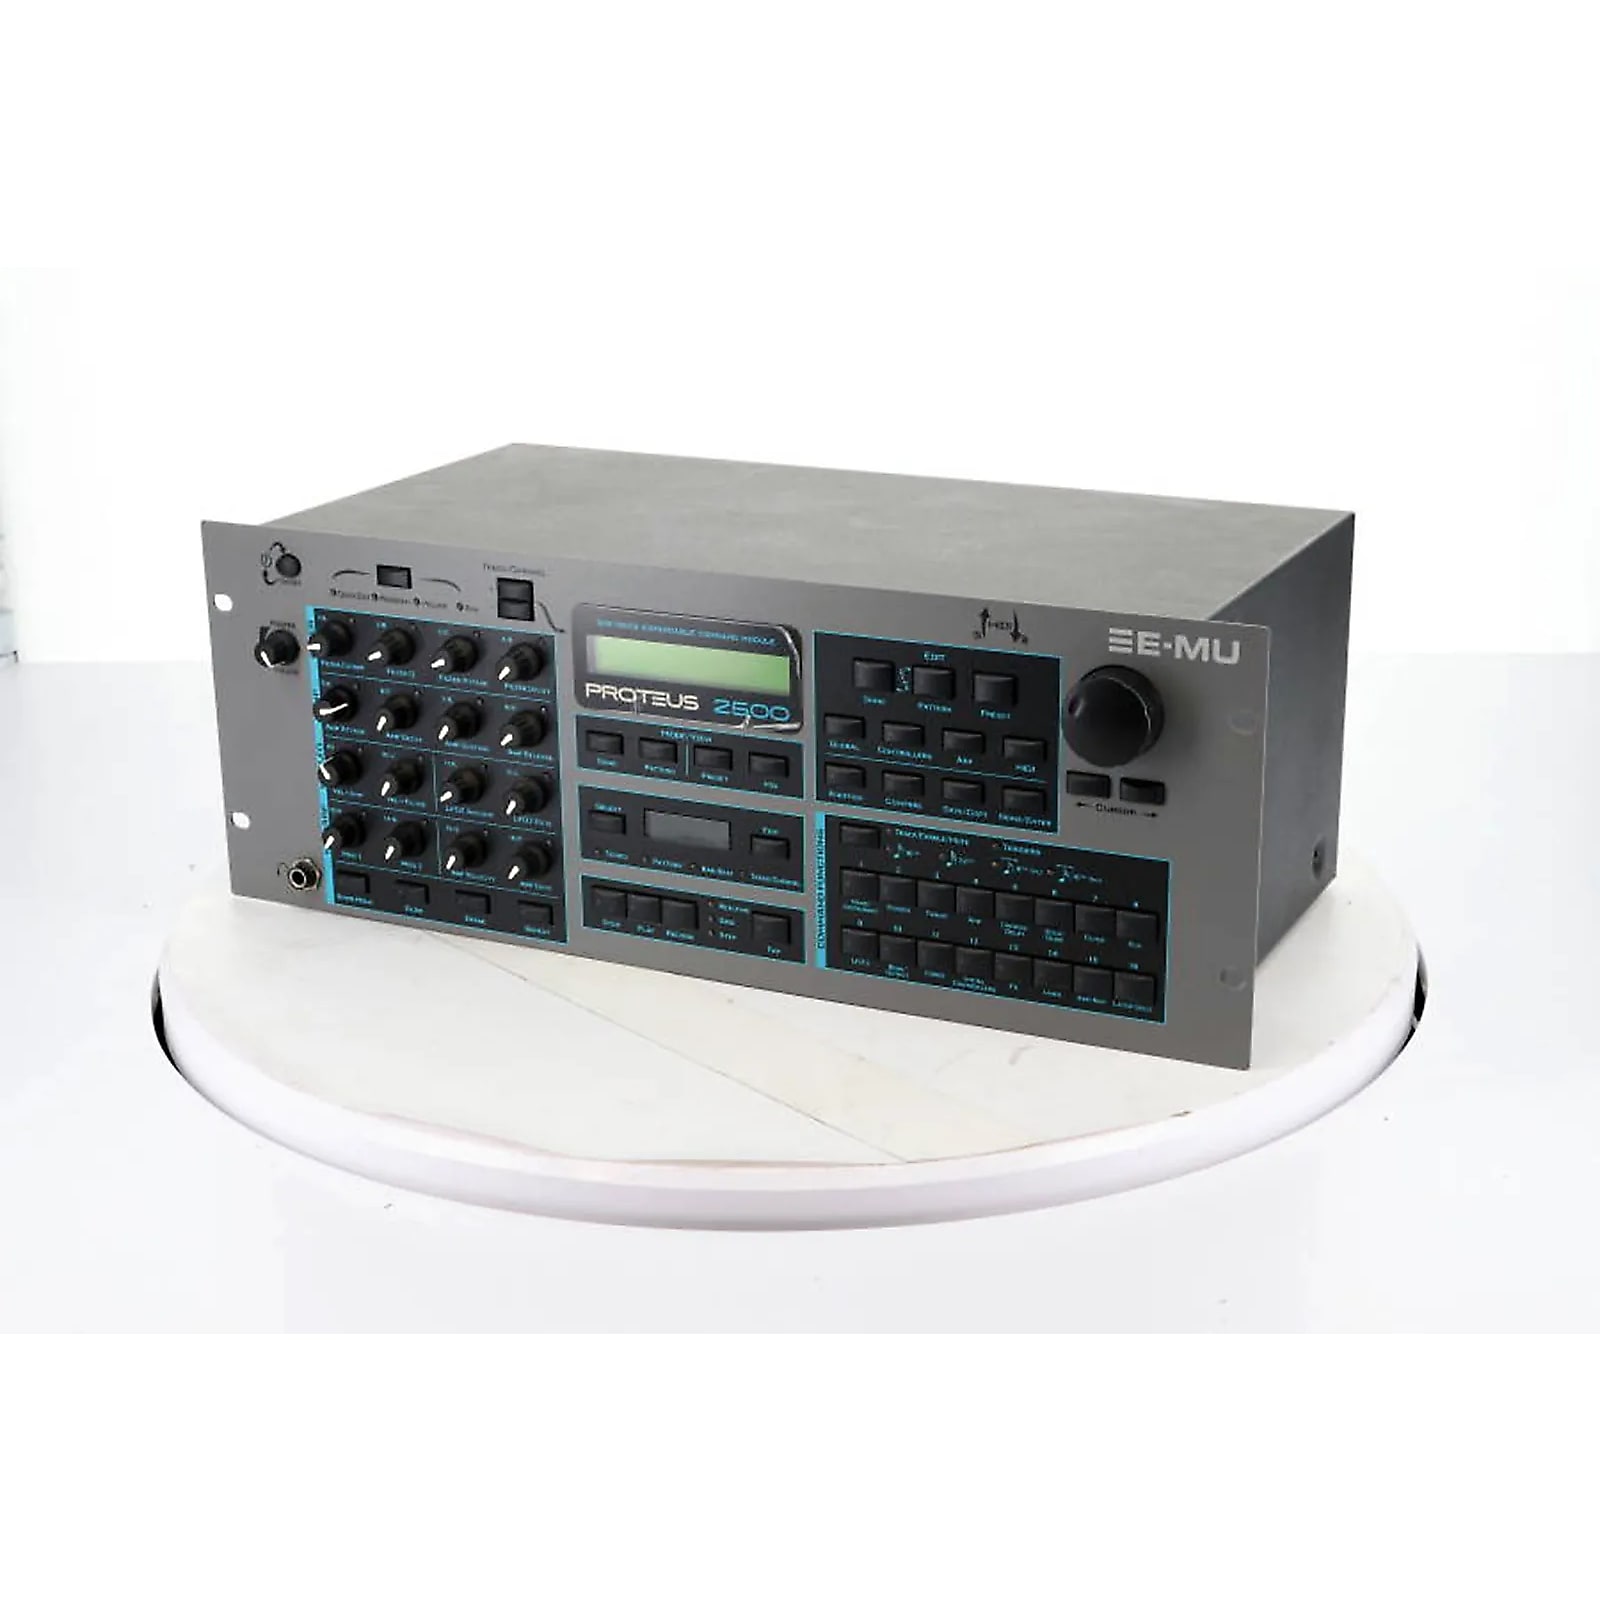 E-MU Systems Proteus 2500 Rackmount 128-Voice Sampler Module | Reverb